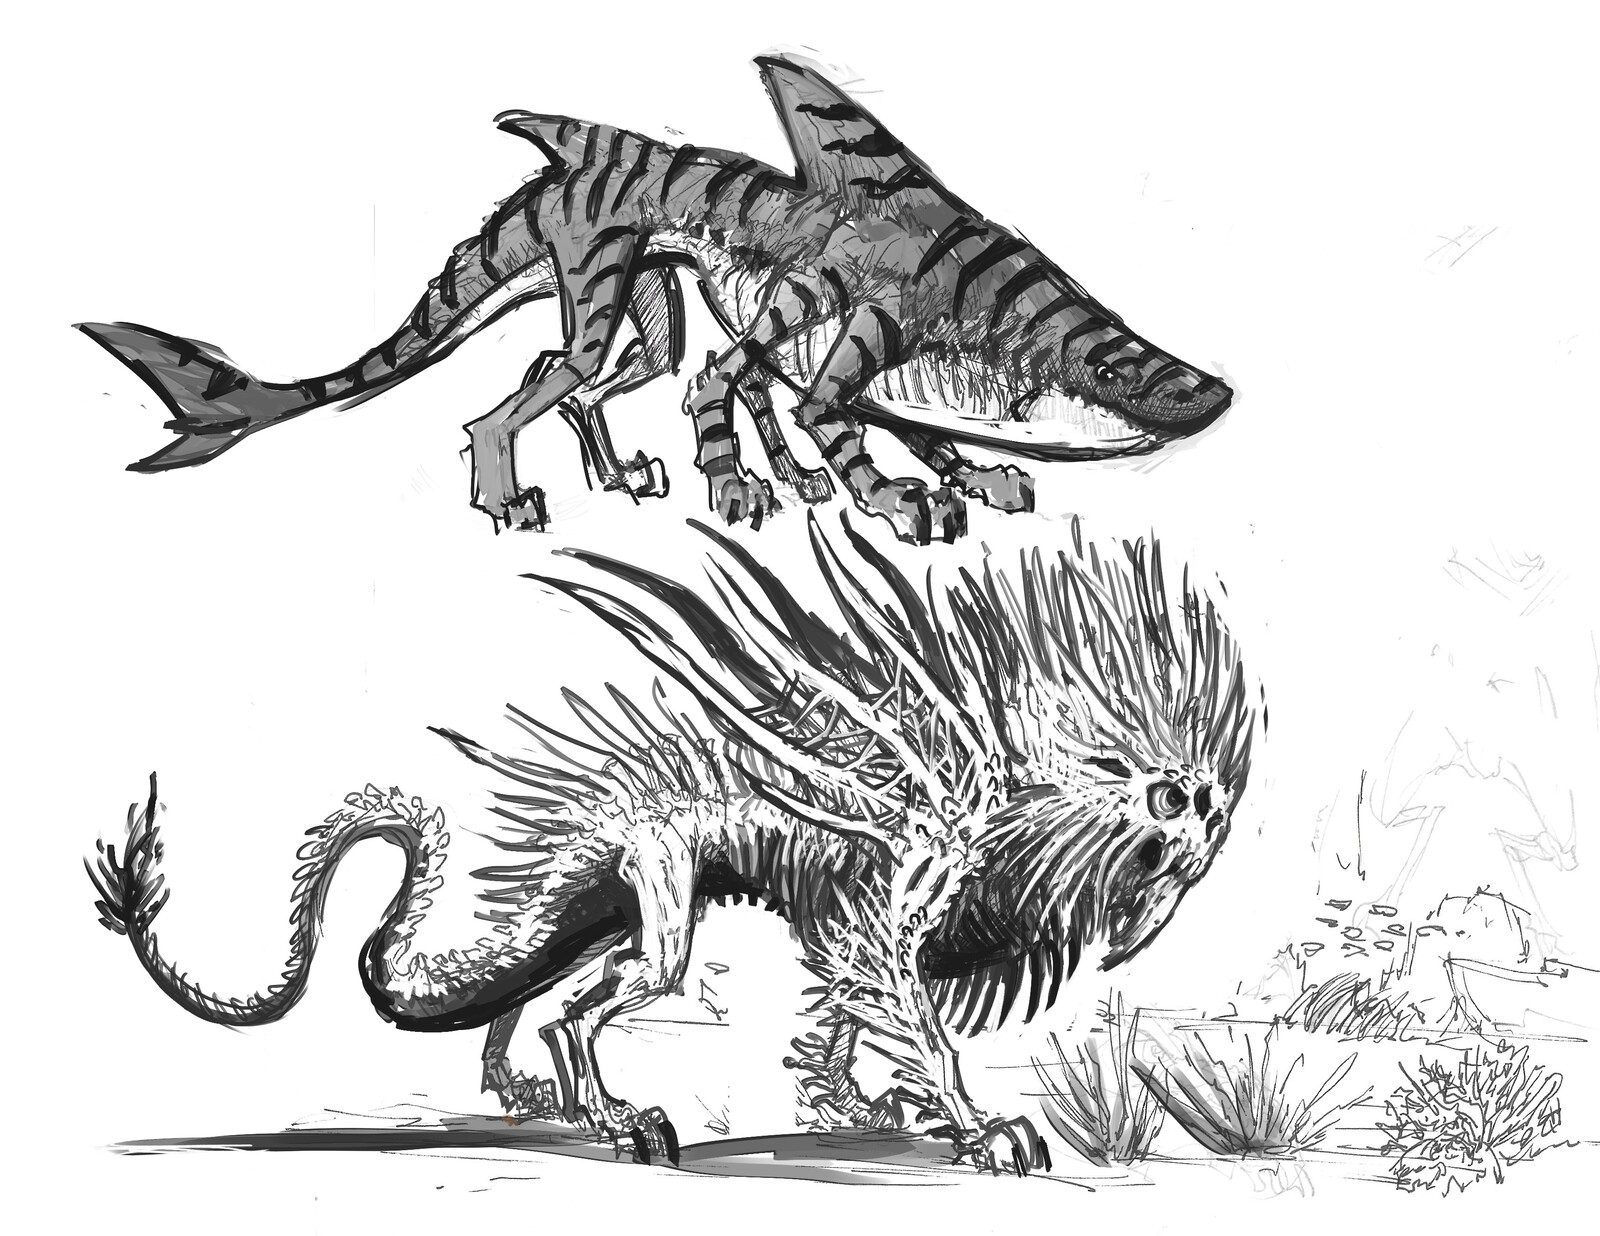 Original inspiration sketch, Lionfish and tigershark